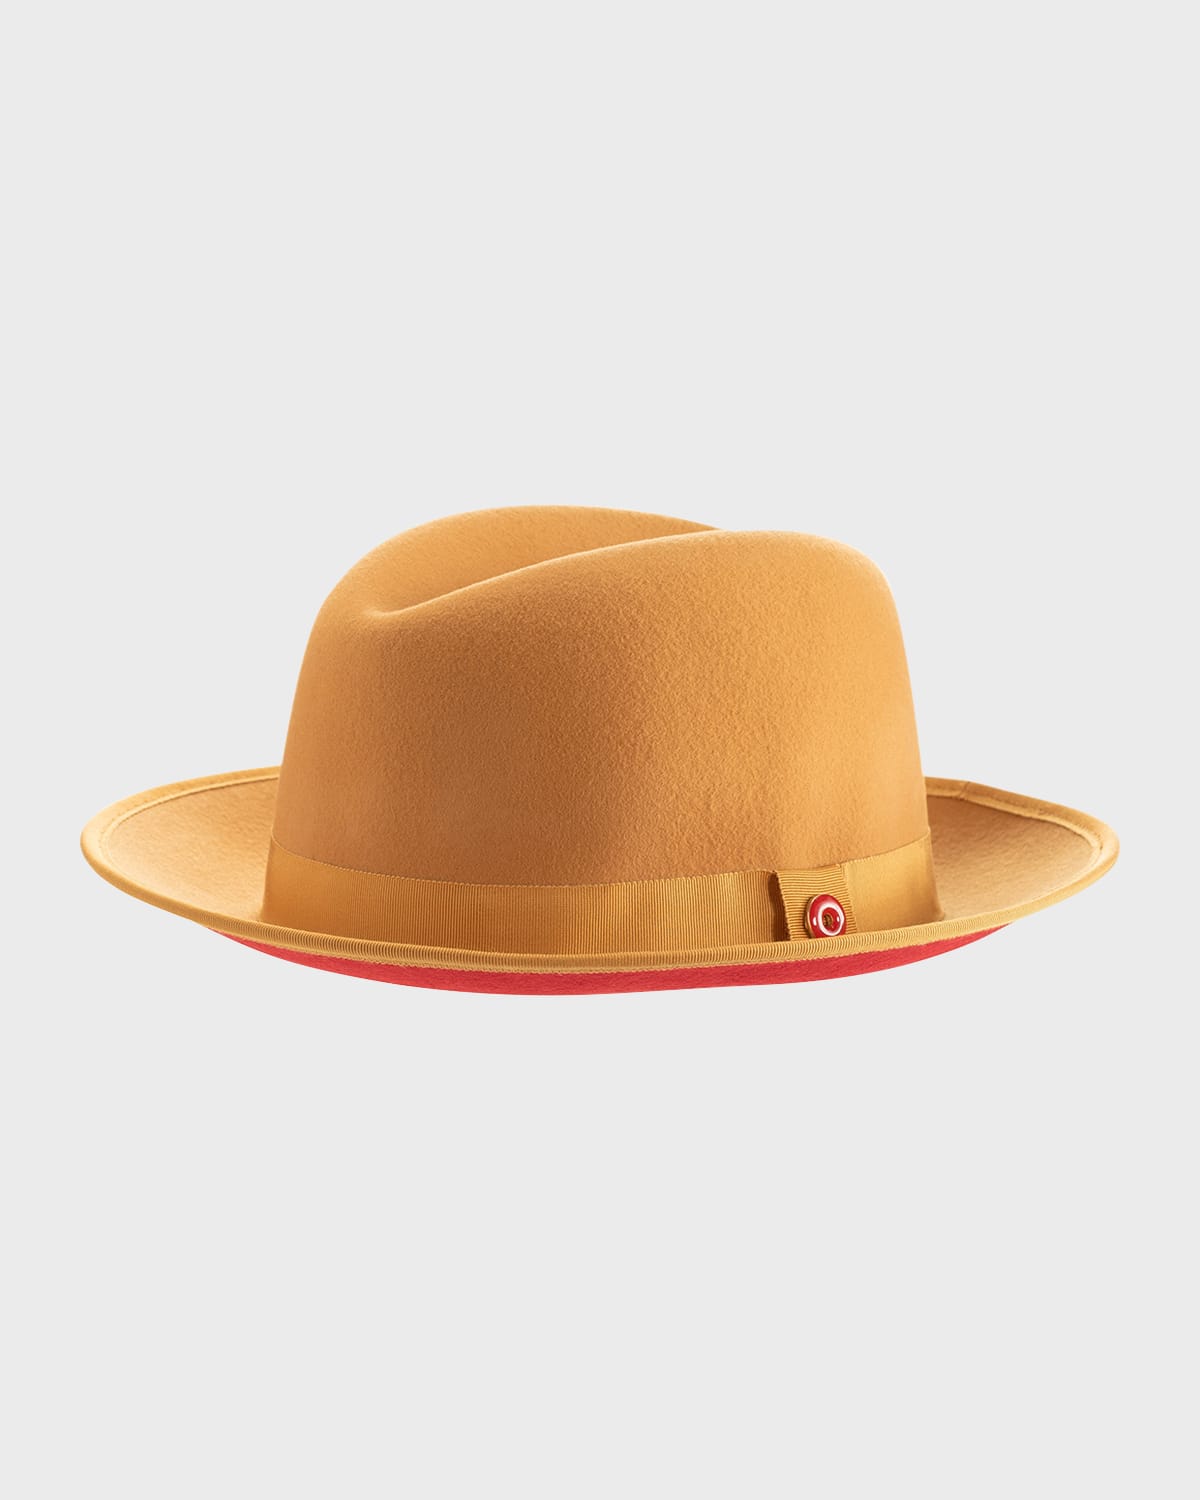 Keith James Men's King Fedora Hat